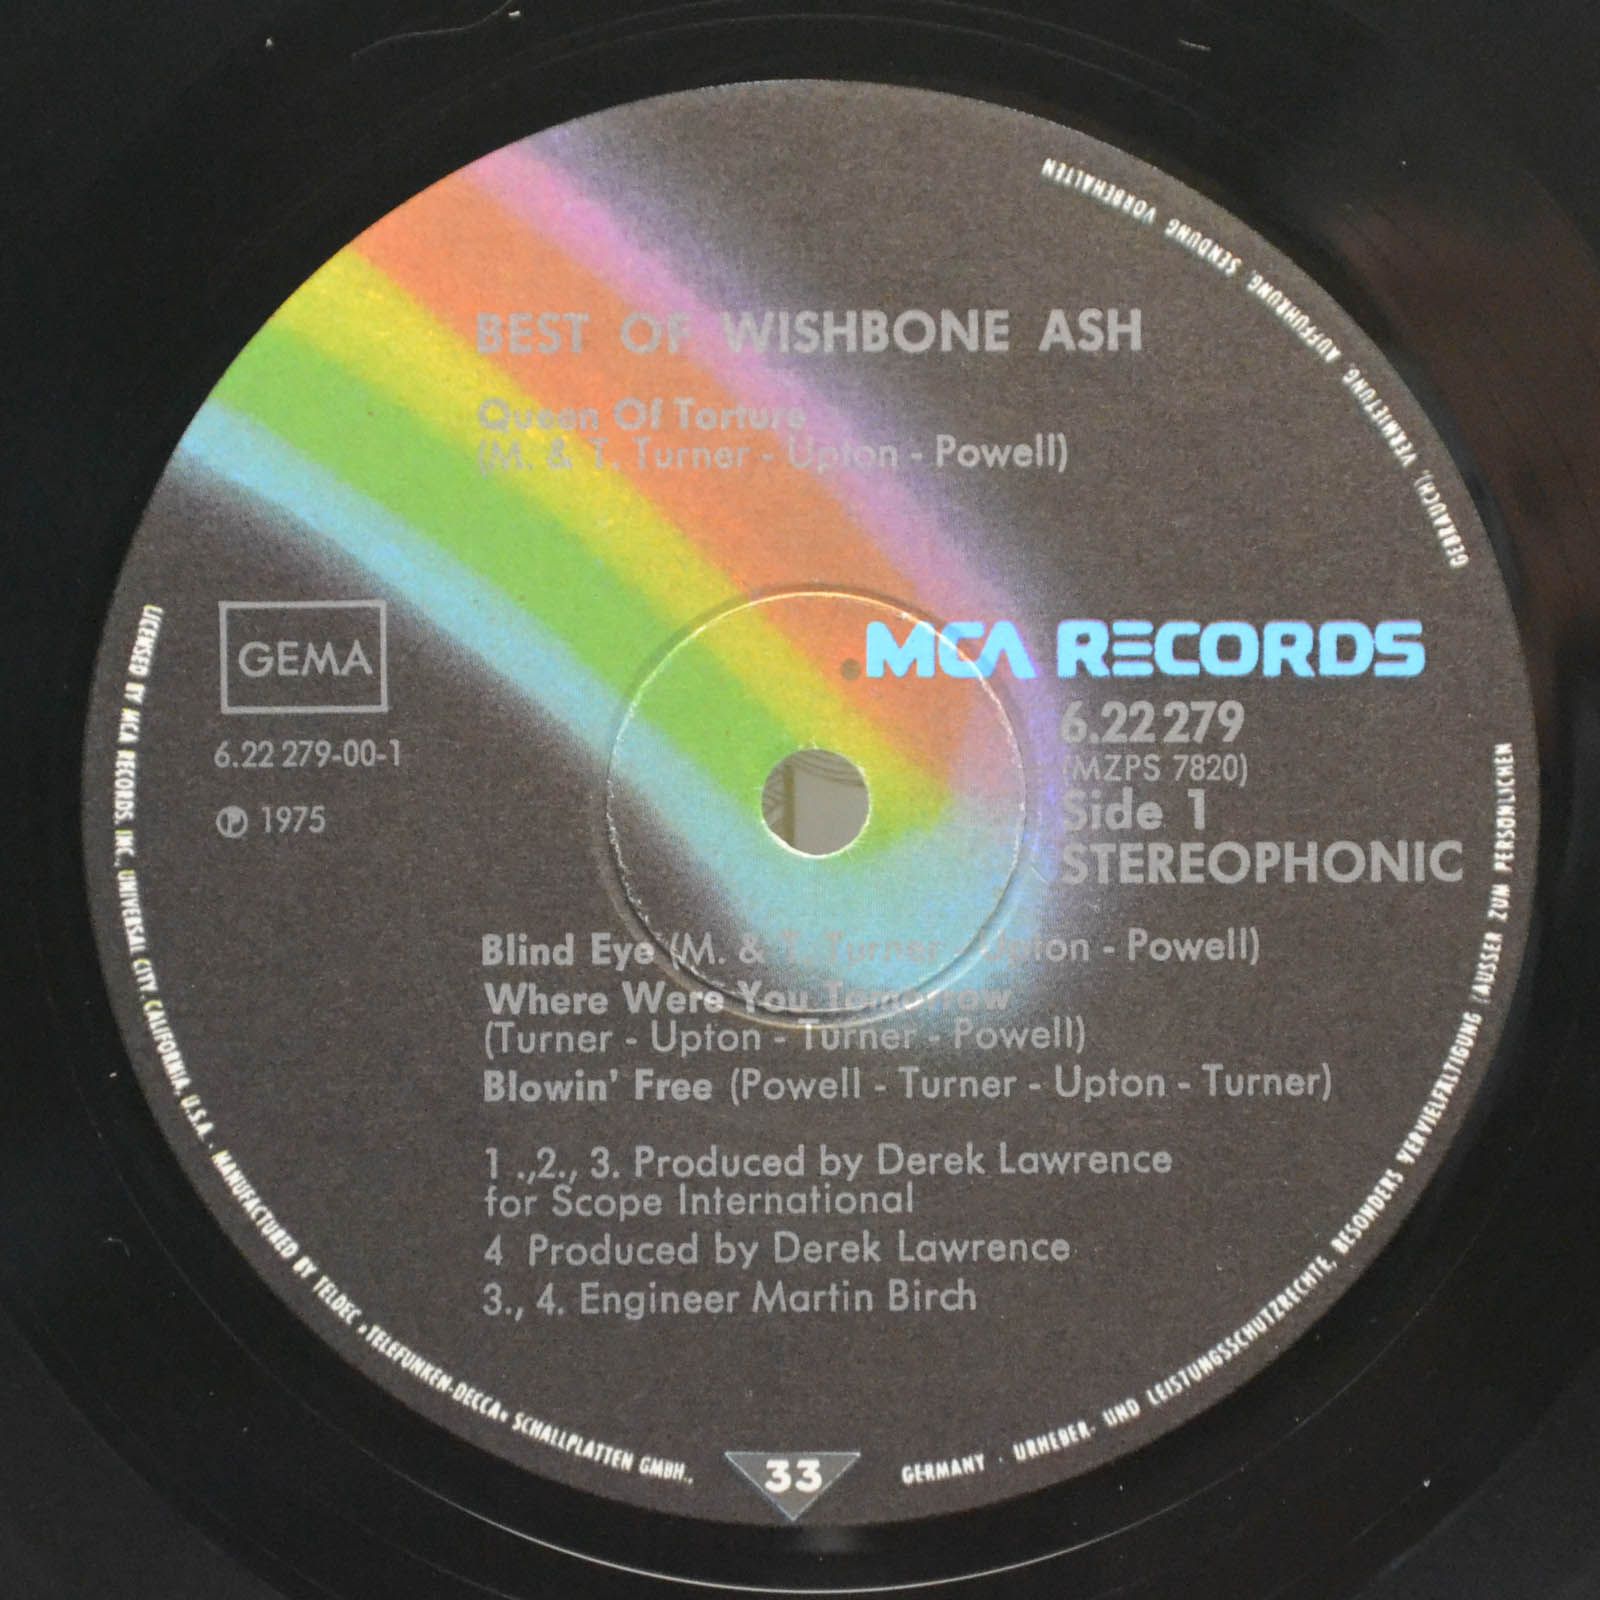 Wishbone Ash — Best Of Wishbone Ash, 1975